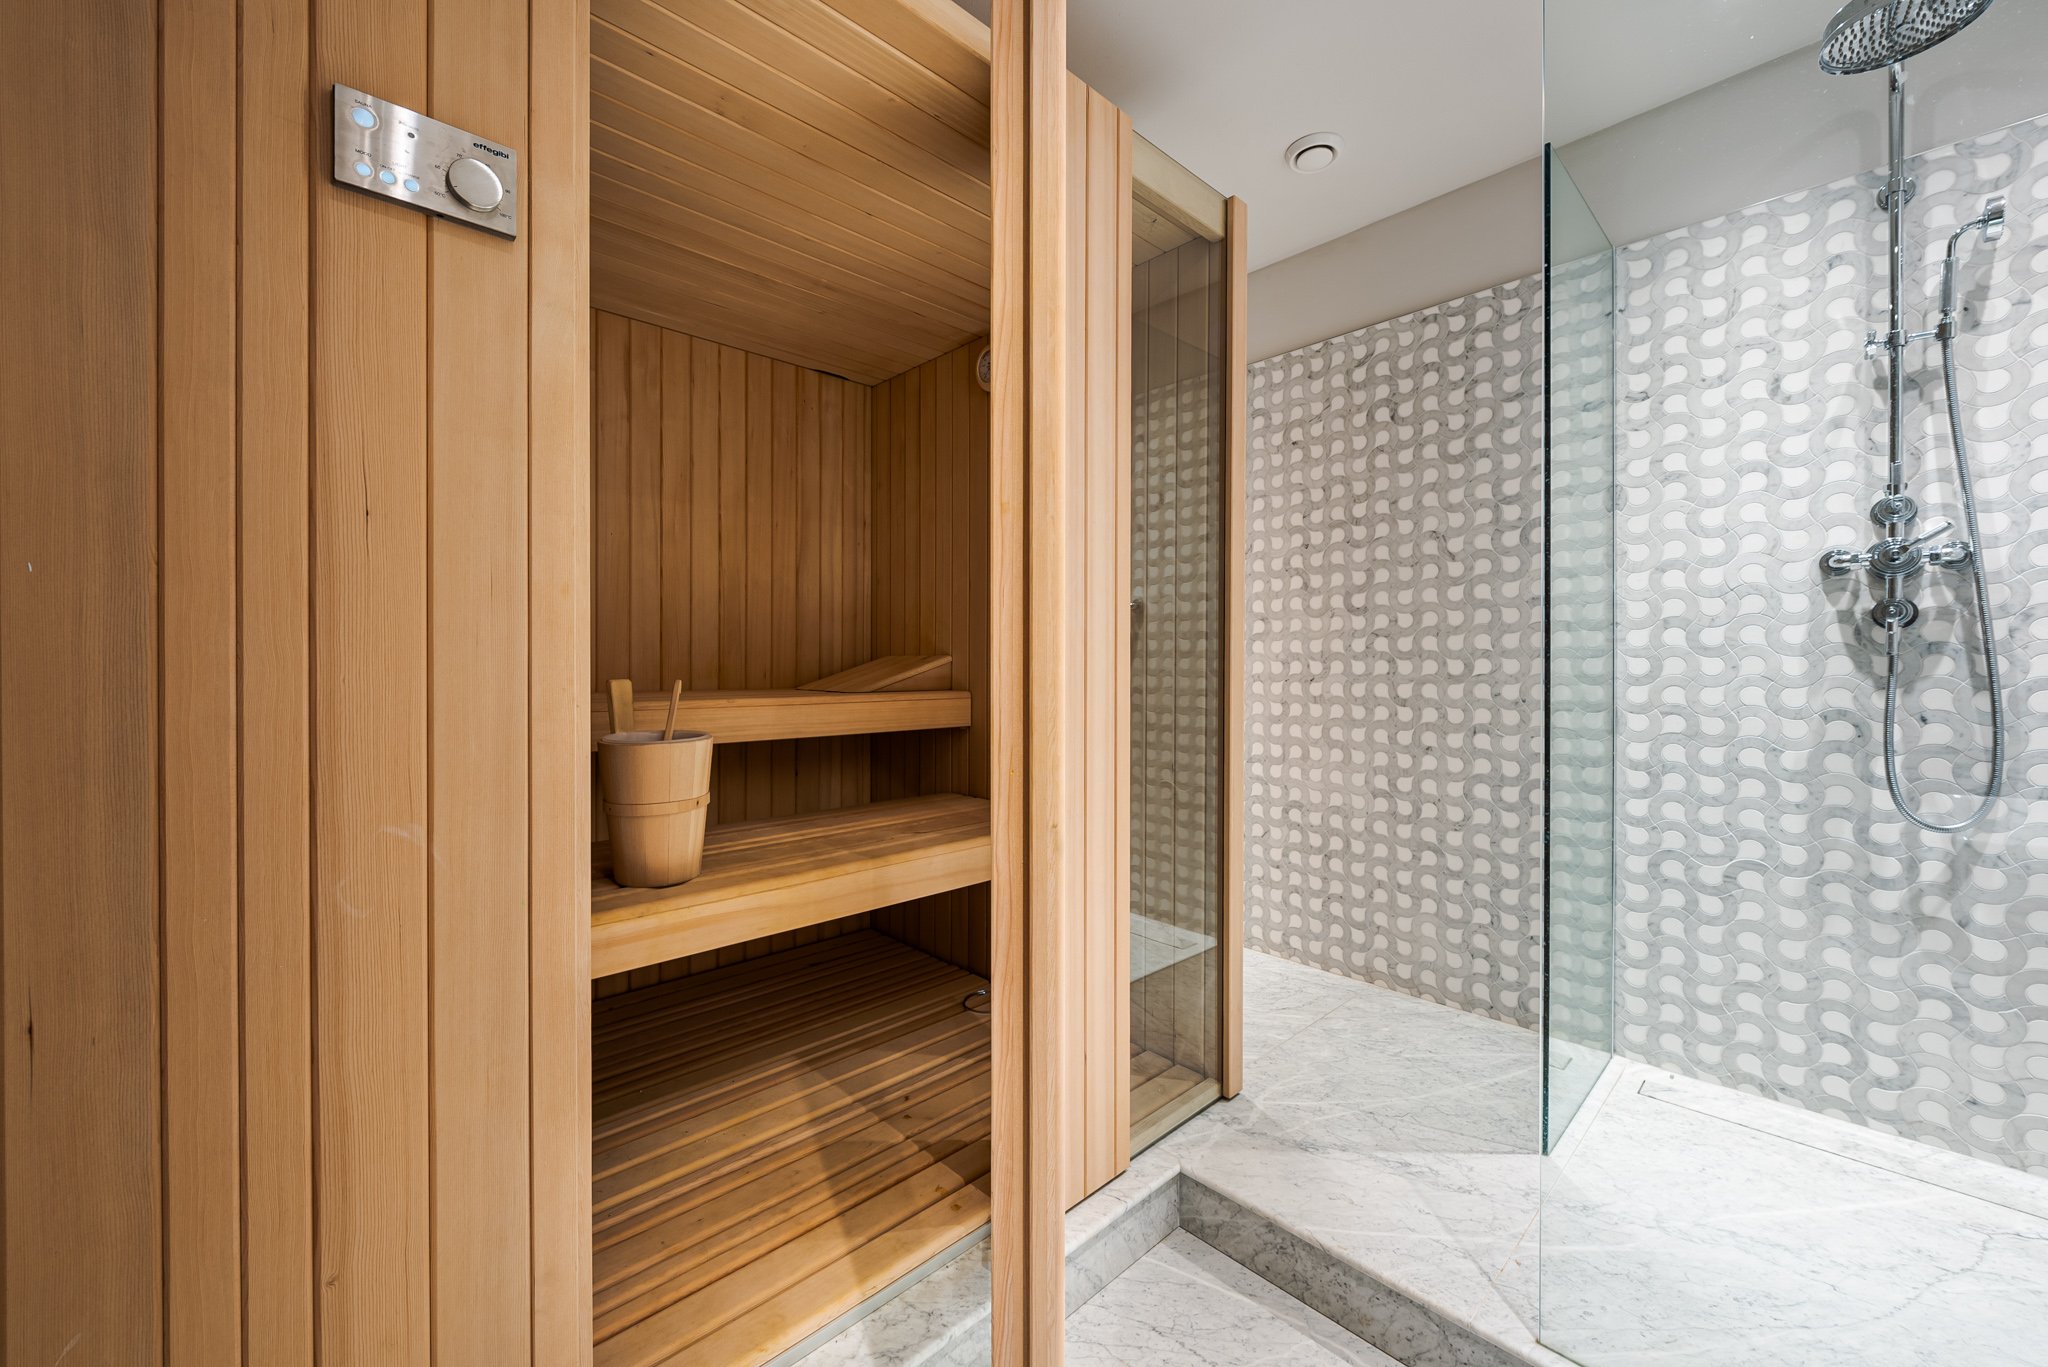 SSH Sauna:Shower Room.jpg